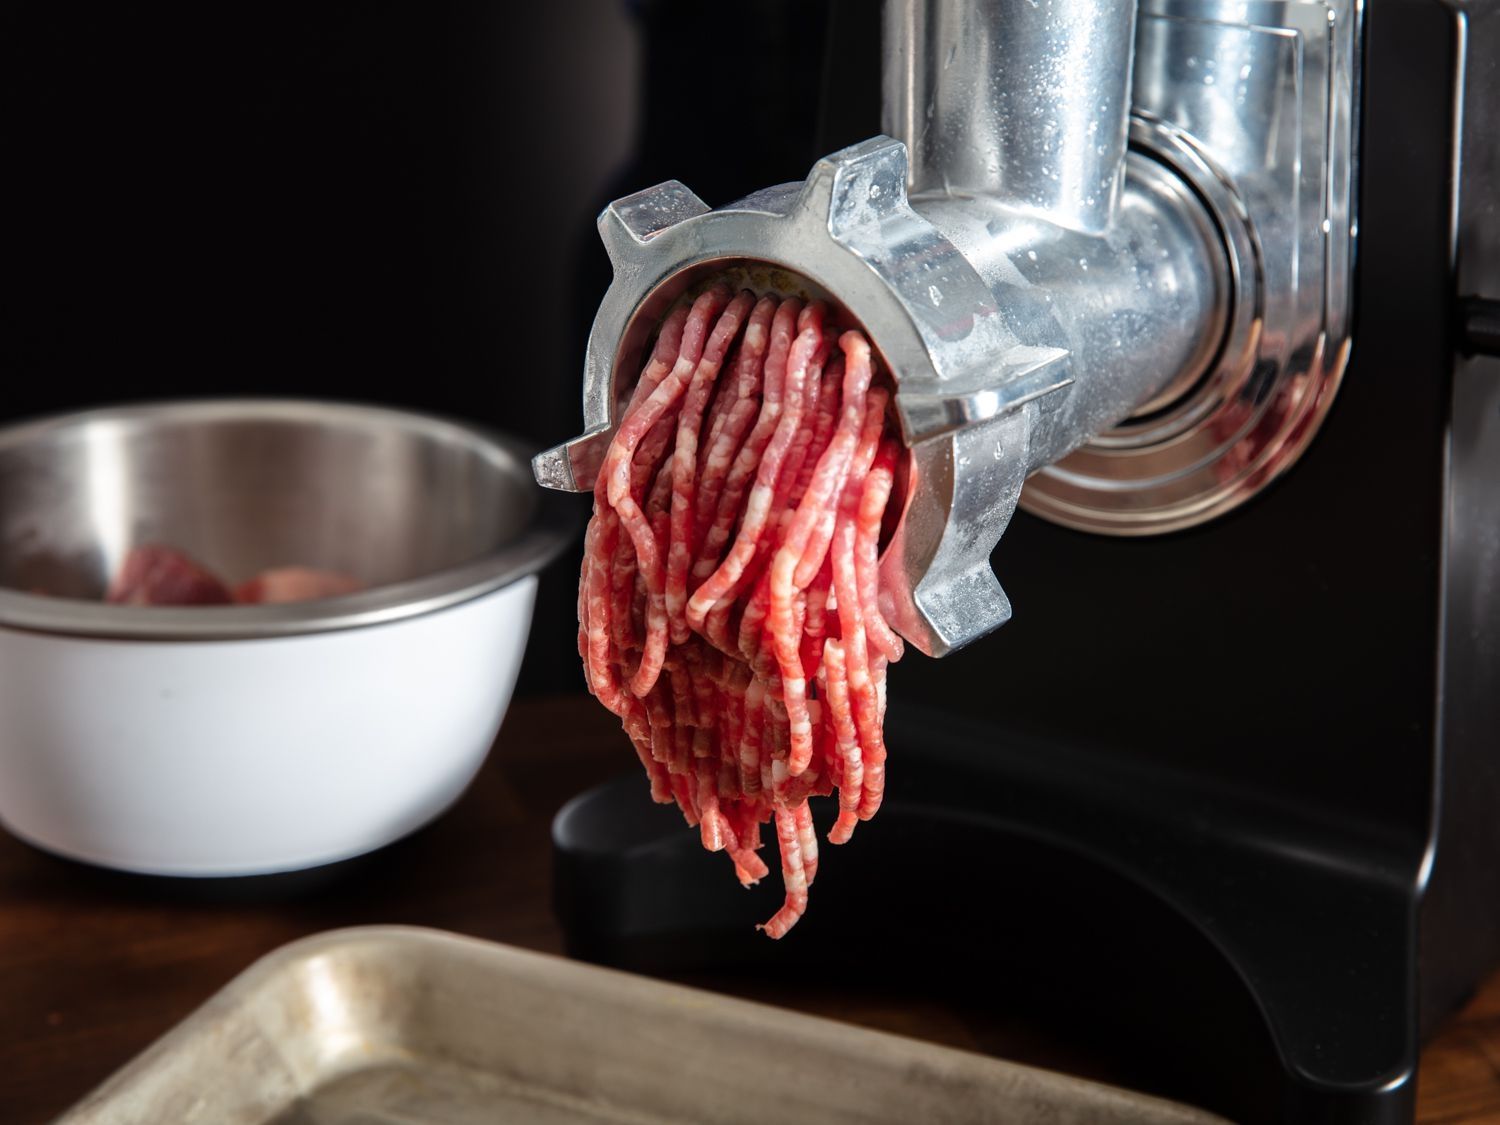 20210716-meat-grinder-review-sausage-grinder-pork-vicky-wasik-seriouseats-23-aefff9c827b0435bb...jpg